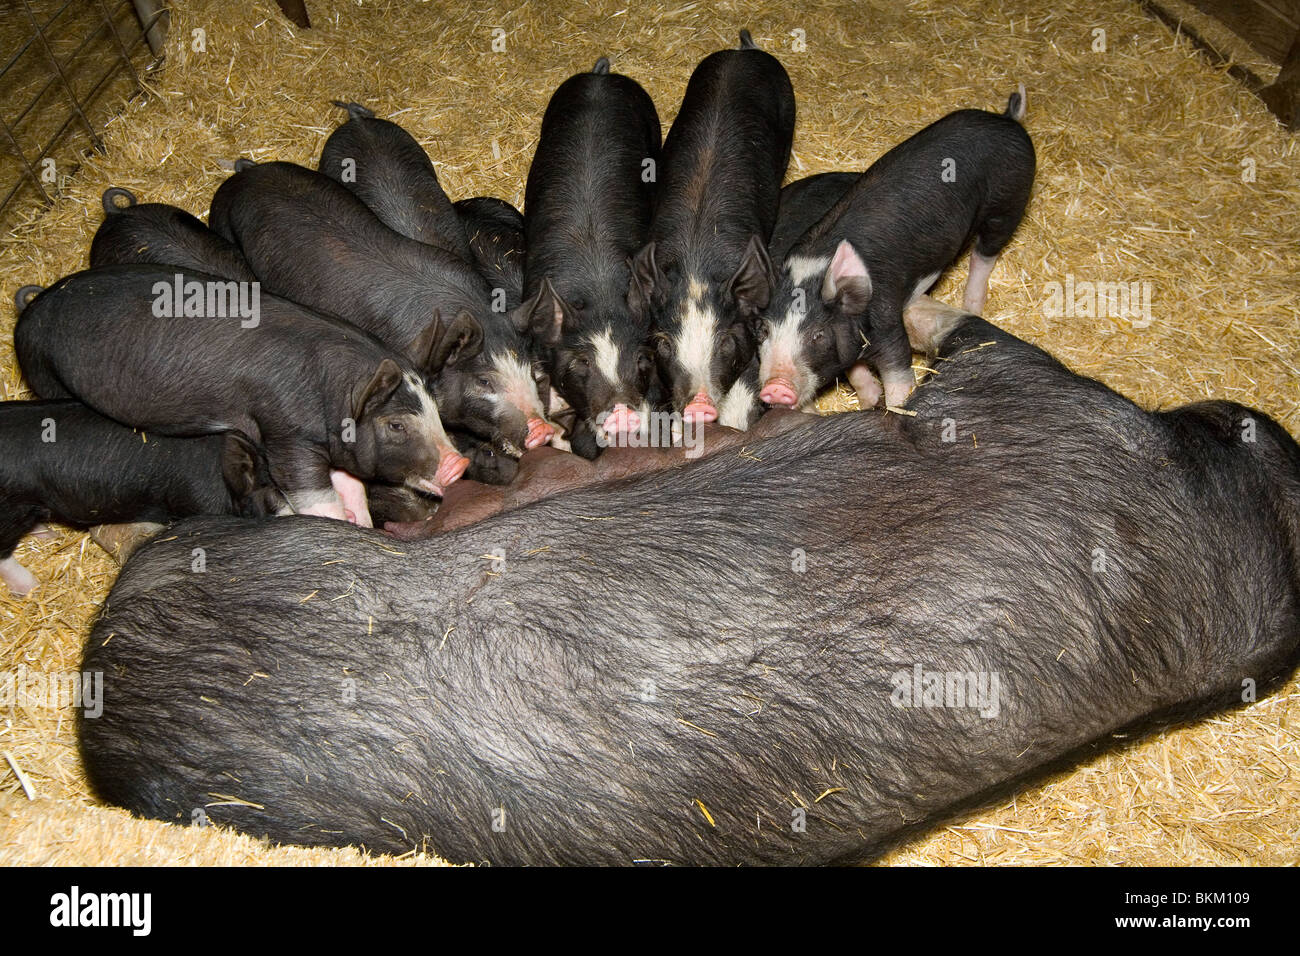 domestic pig Stock Photo